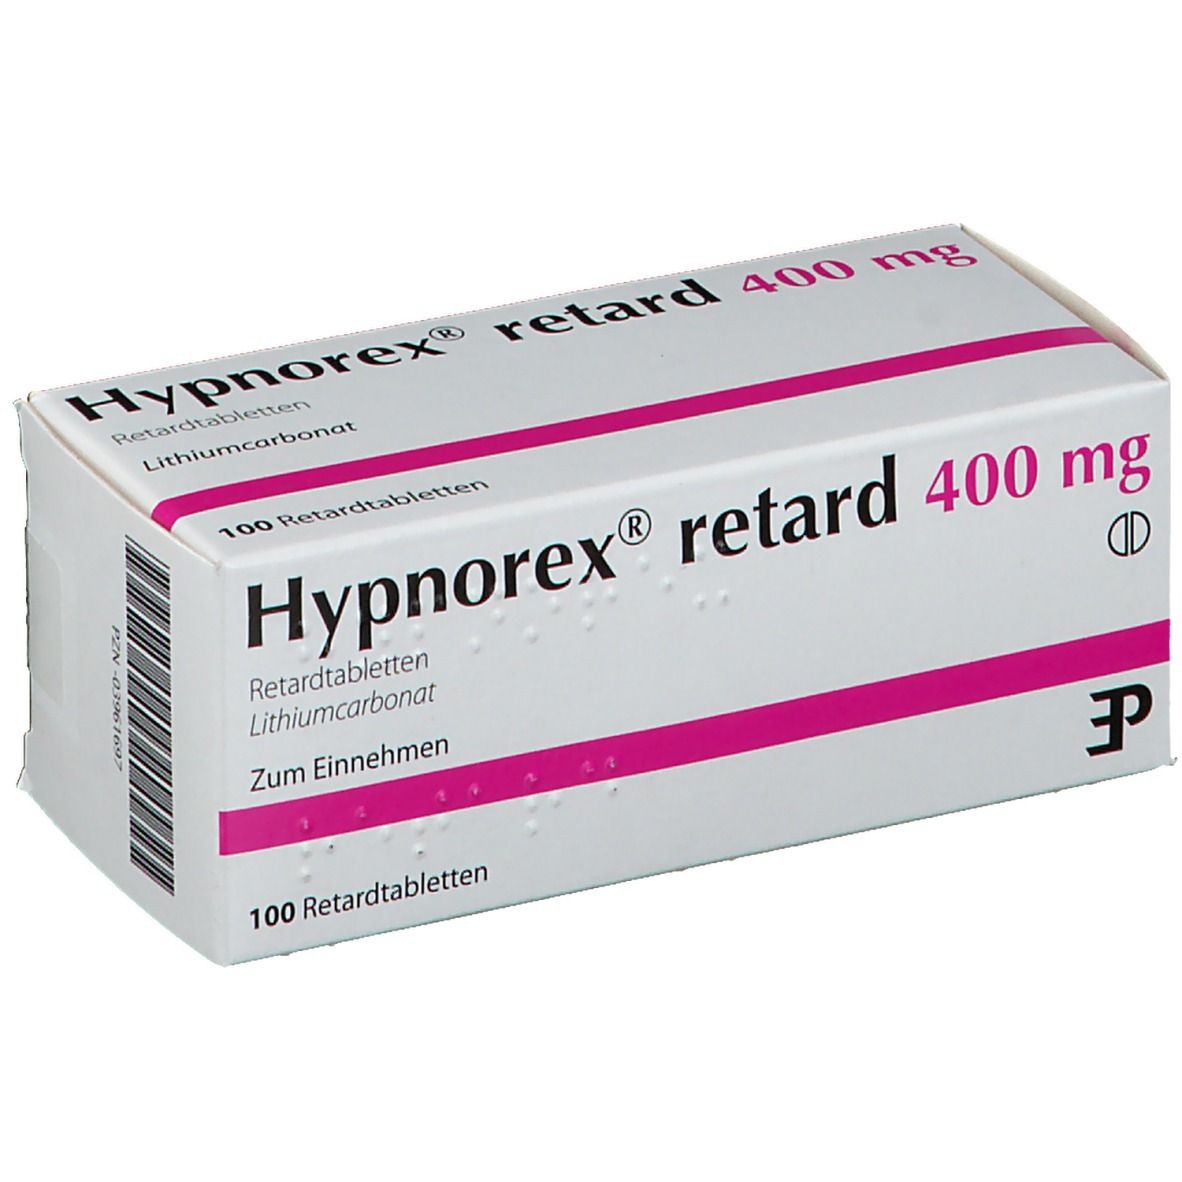 Hypnorex® retard 400 mg